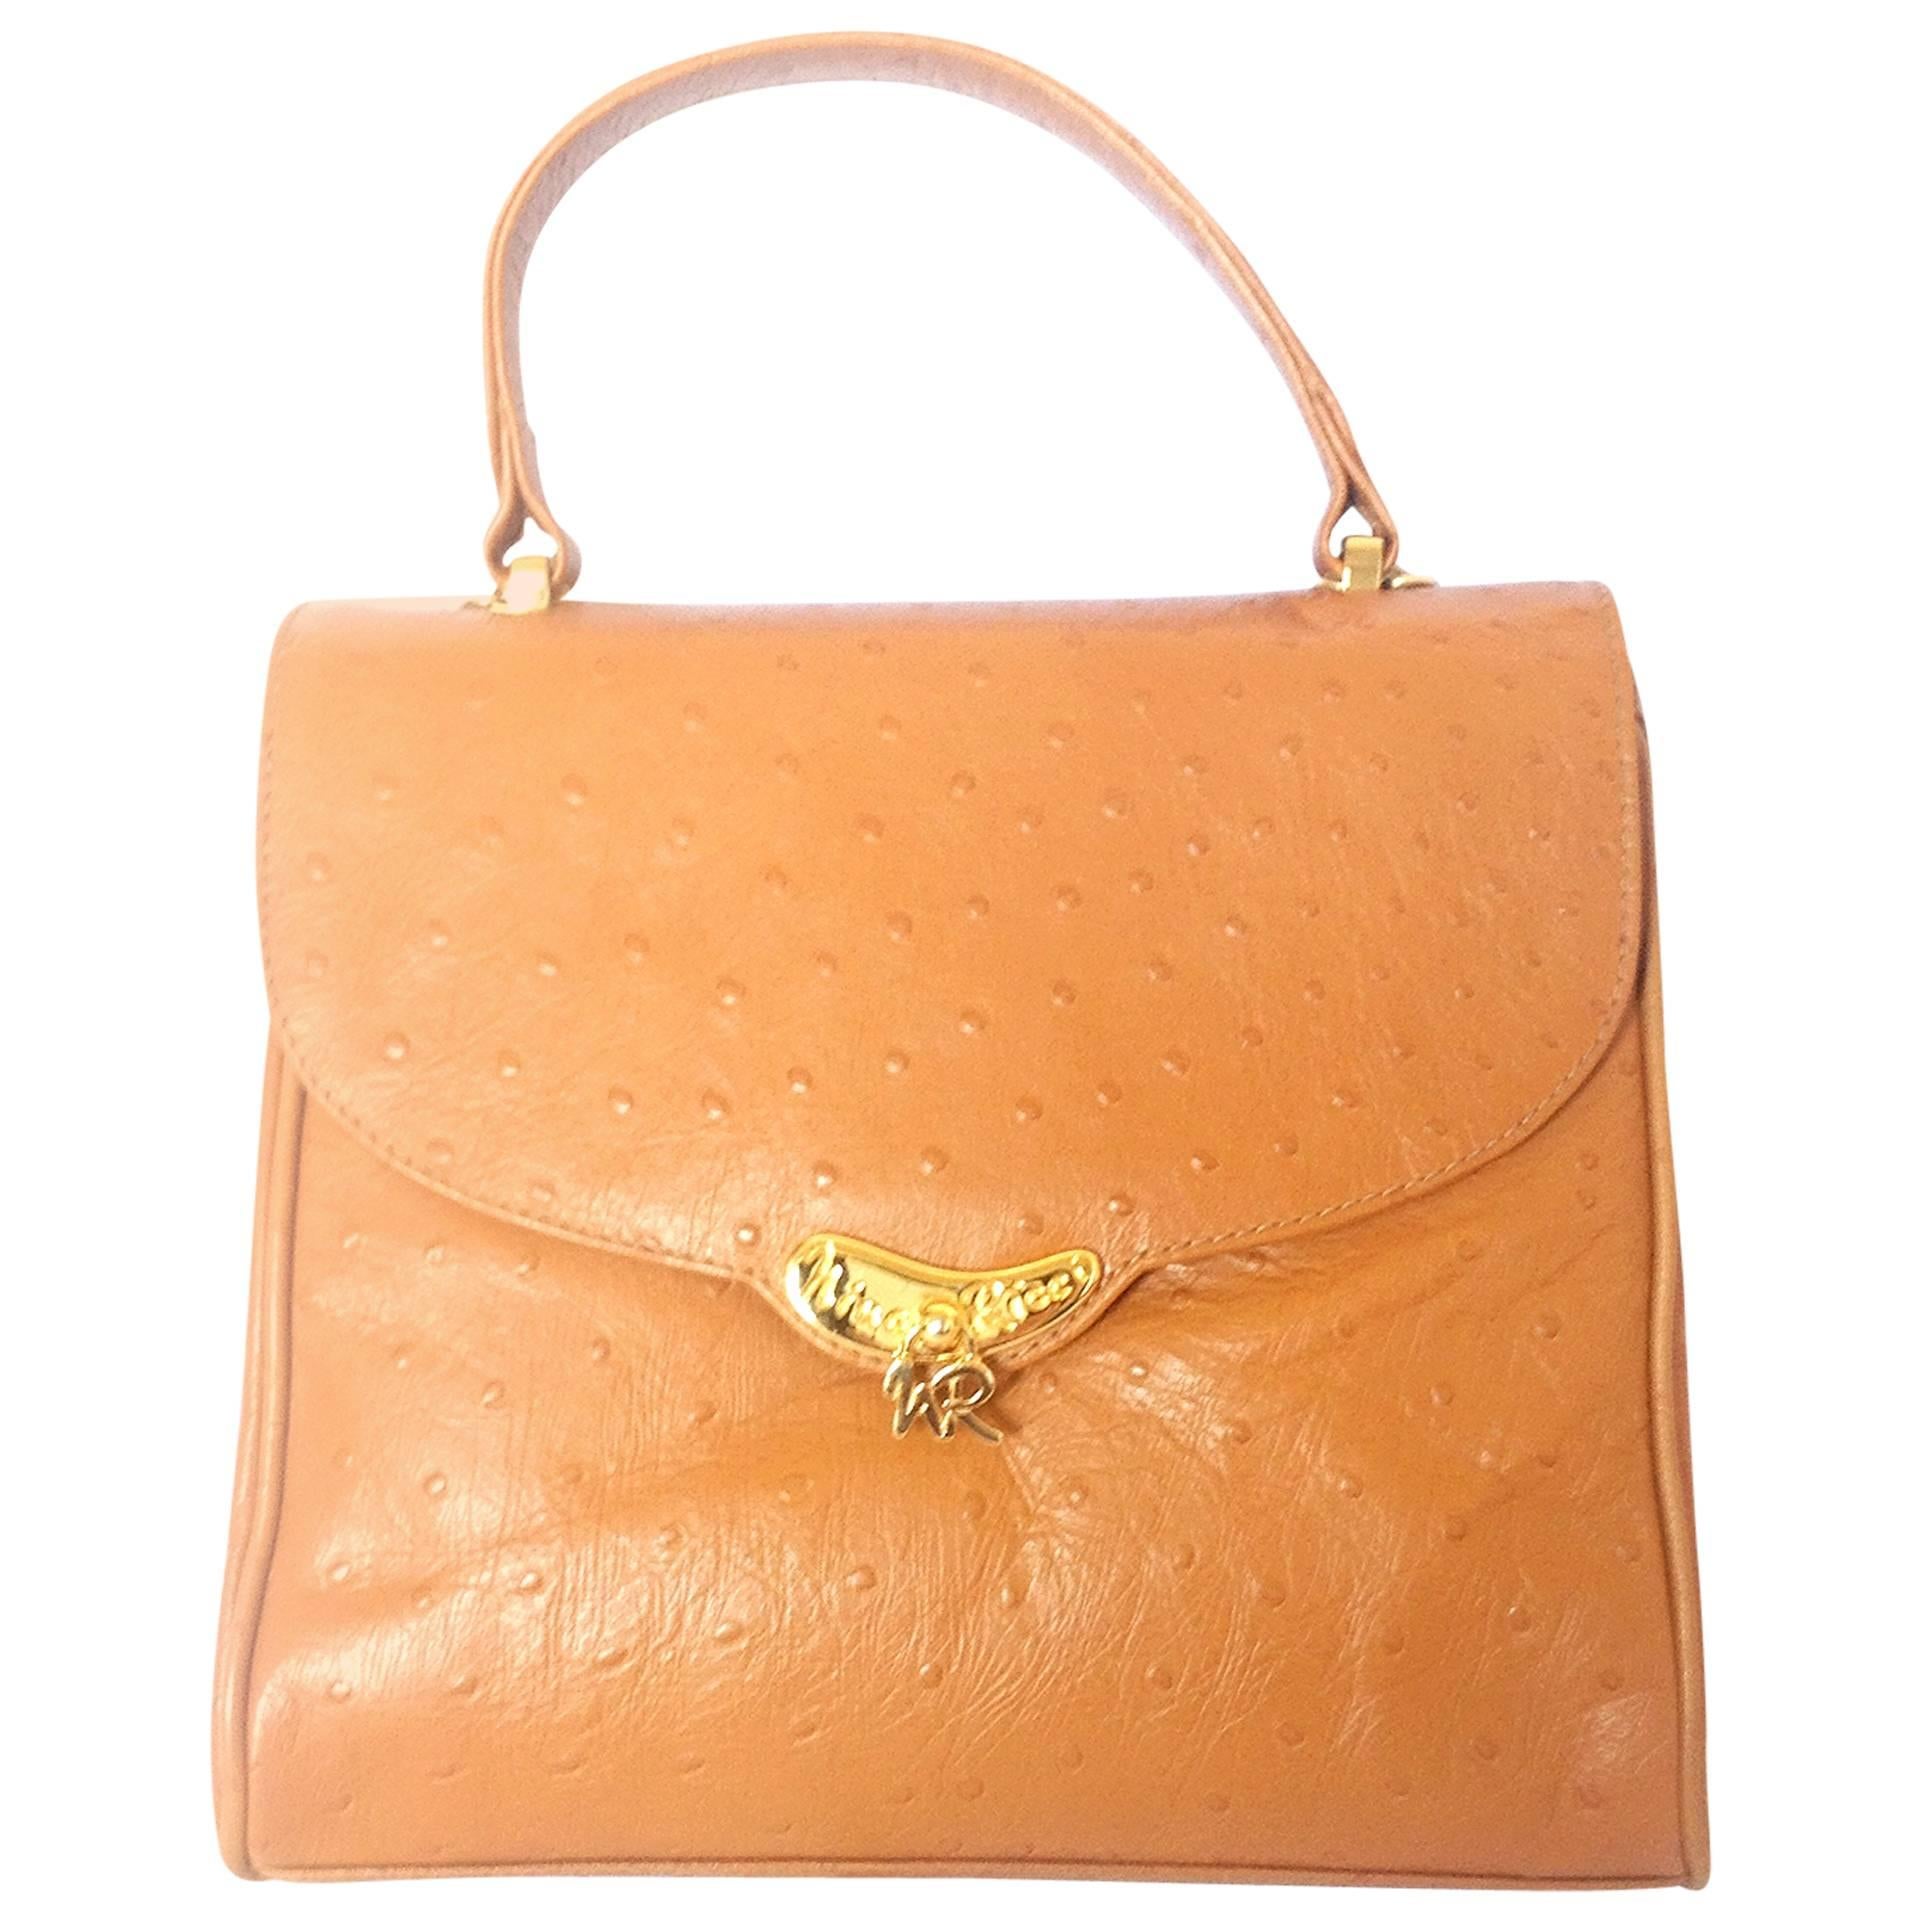 MINT. Vintage Nina Ricci tan brown ostrich-embossed leather handbag purse. For Sale